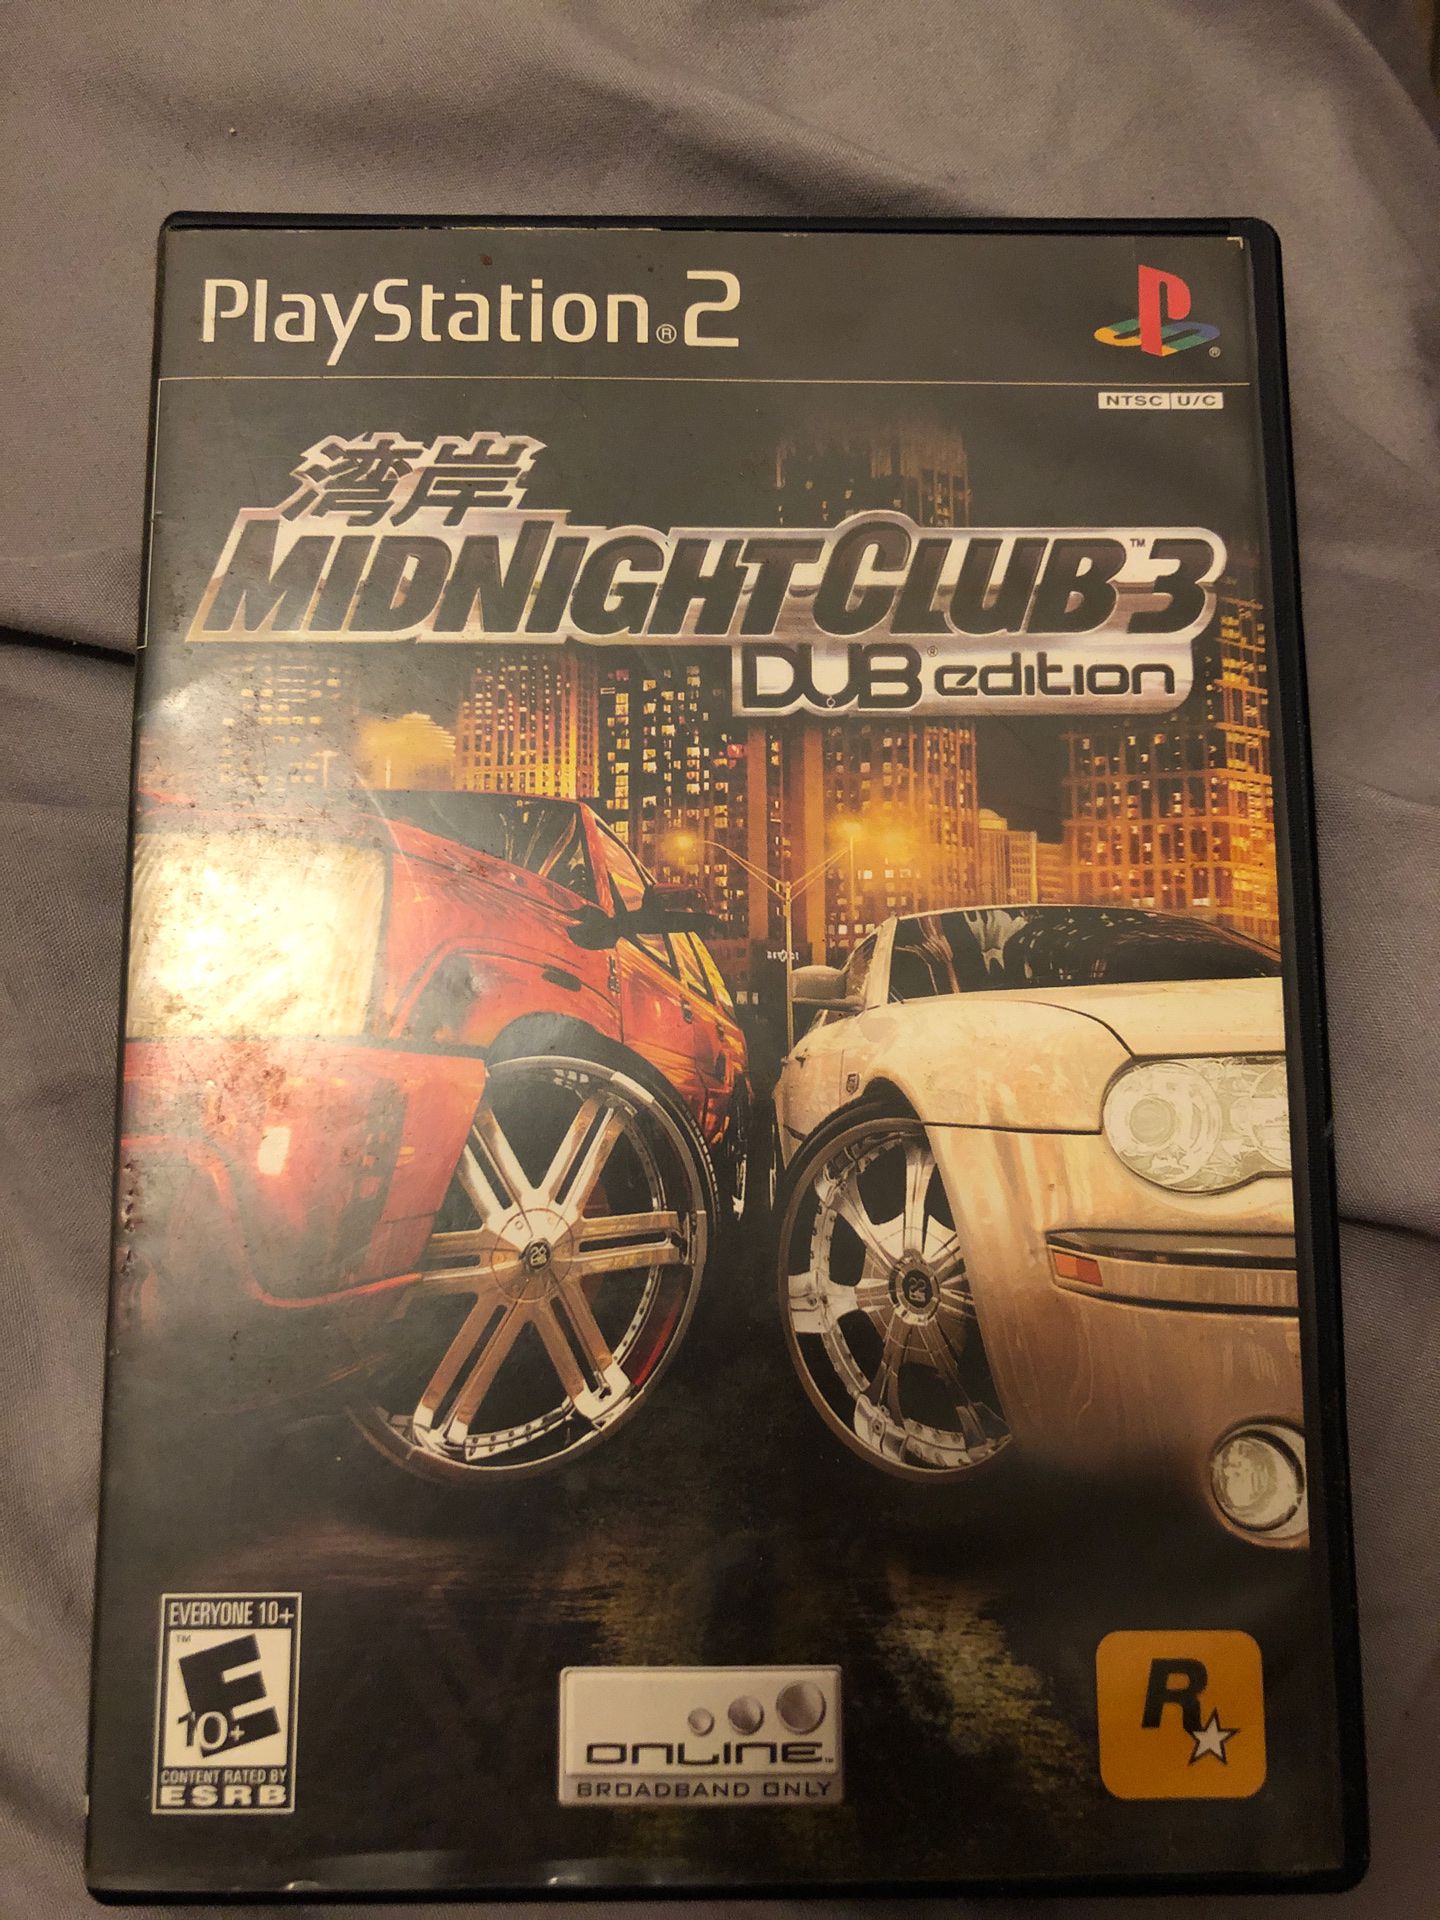 PS 2 Midnight club three dub edition